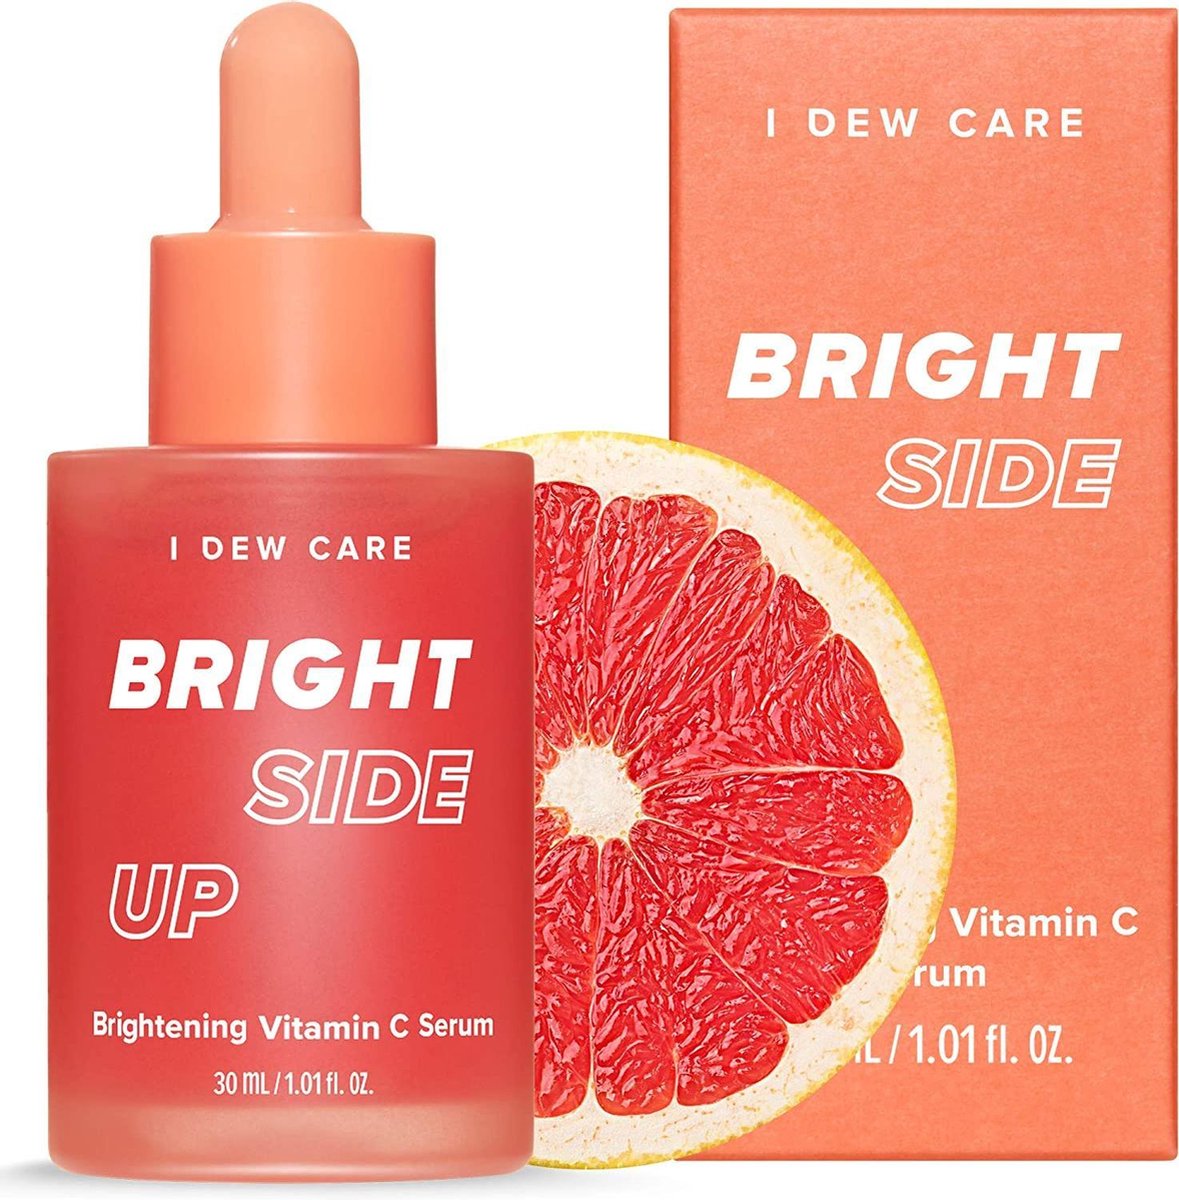 I Dew Care Bright Side Up - Brightening Vitamin C Serum 30ml - Korean K Beauty Skincare - New 2021 - Glycerin - Niacinamide - Vitamine E & B5